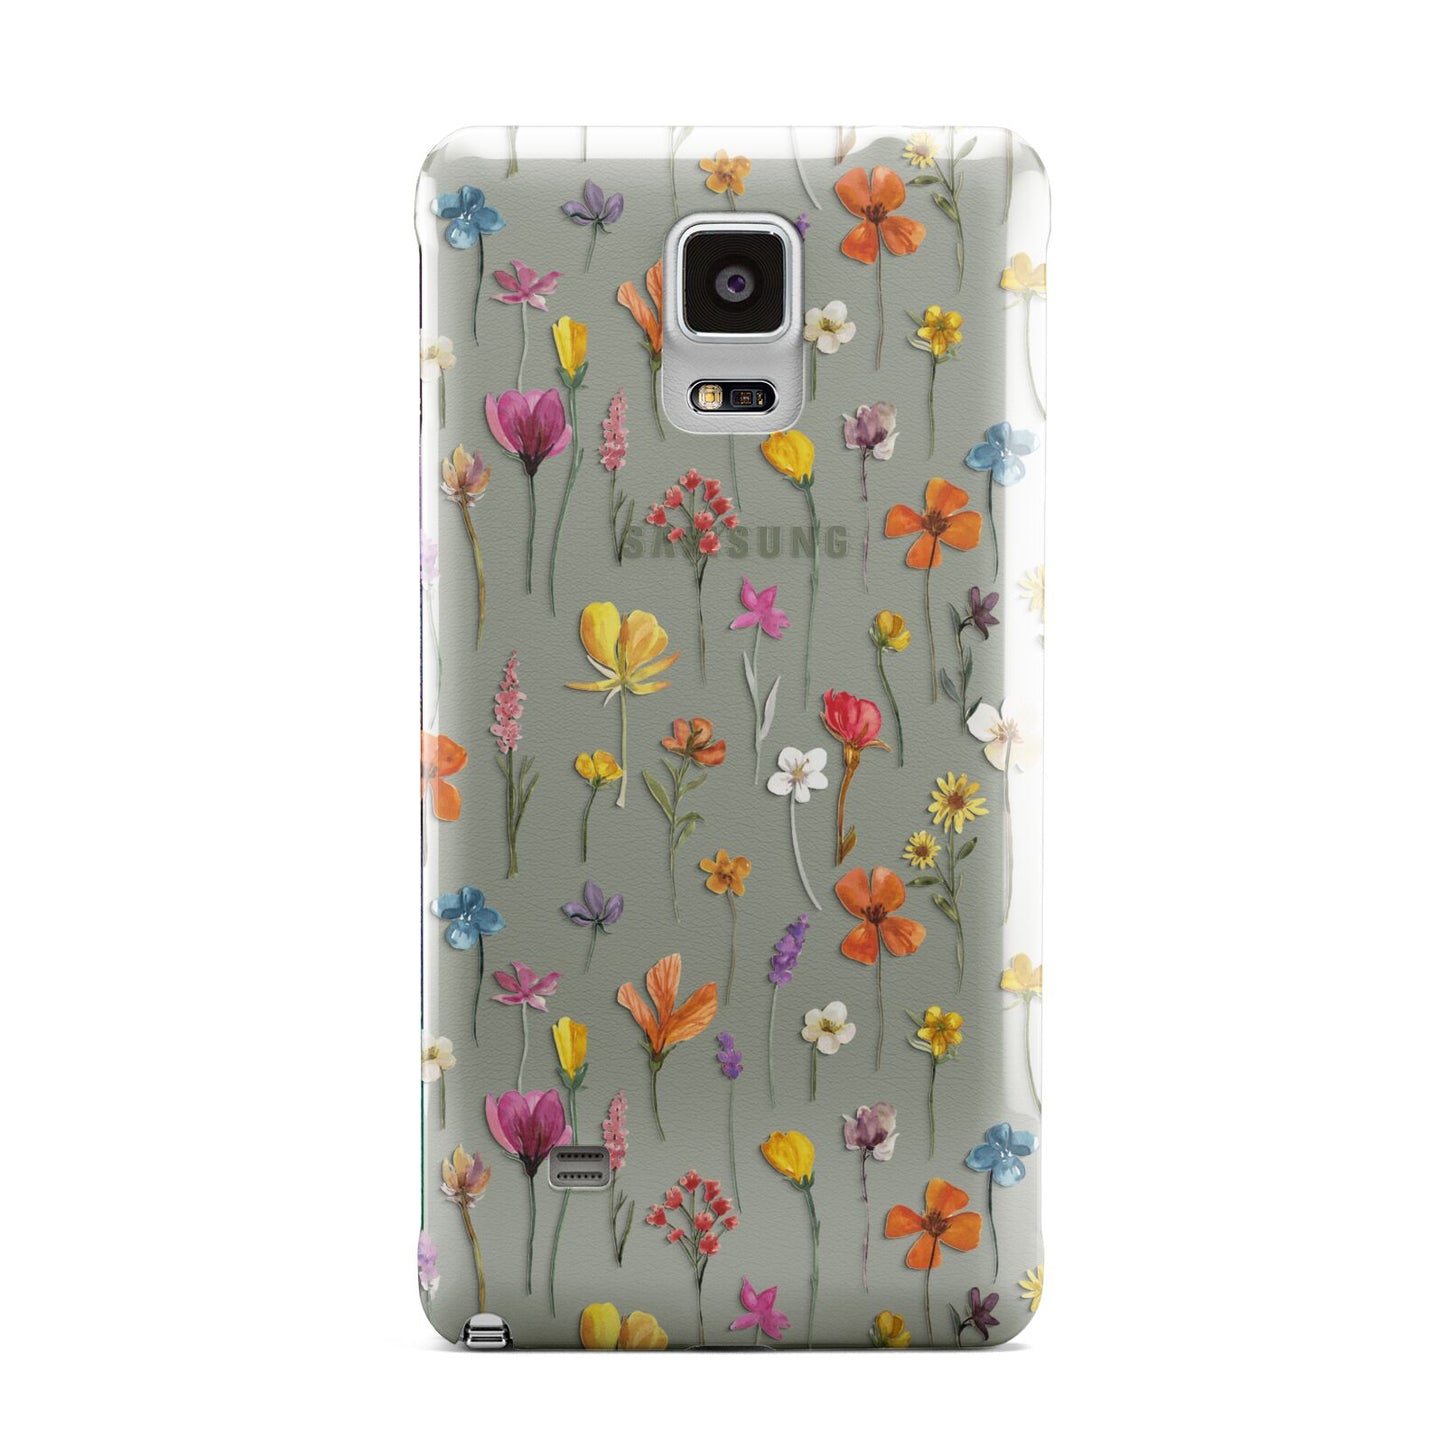 Botanical Floral Samsung Galaxy Note 4 Case